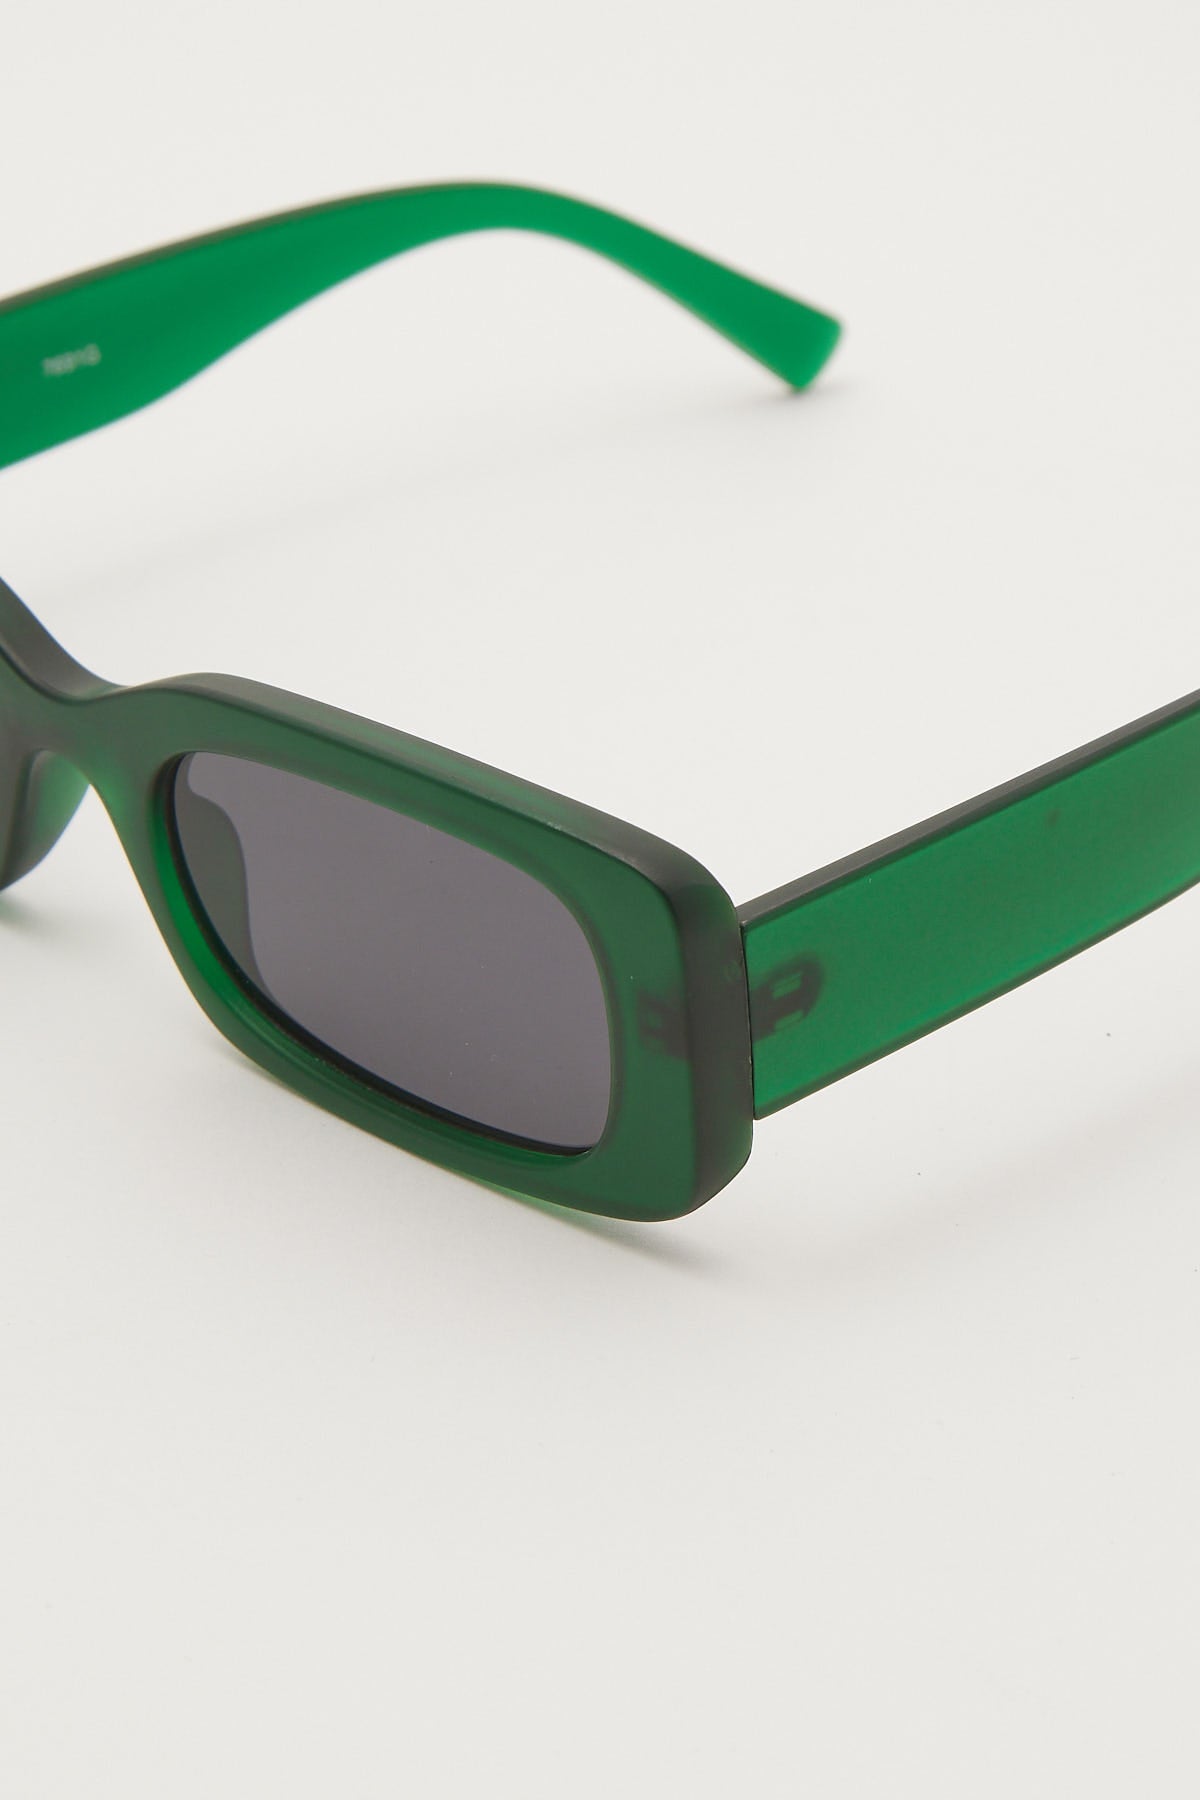 Unity Eyewear Machine Emerald Green